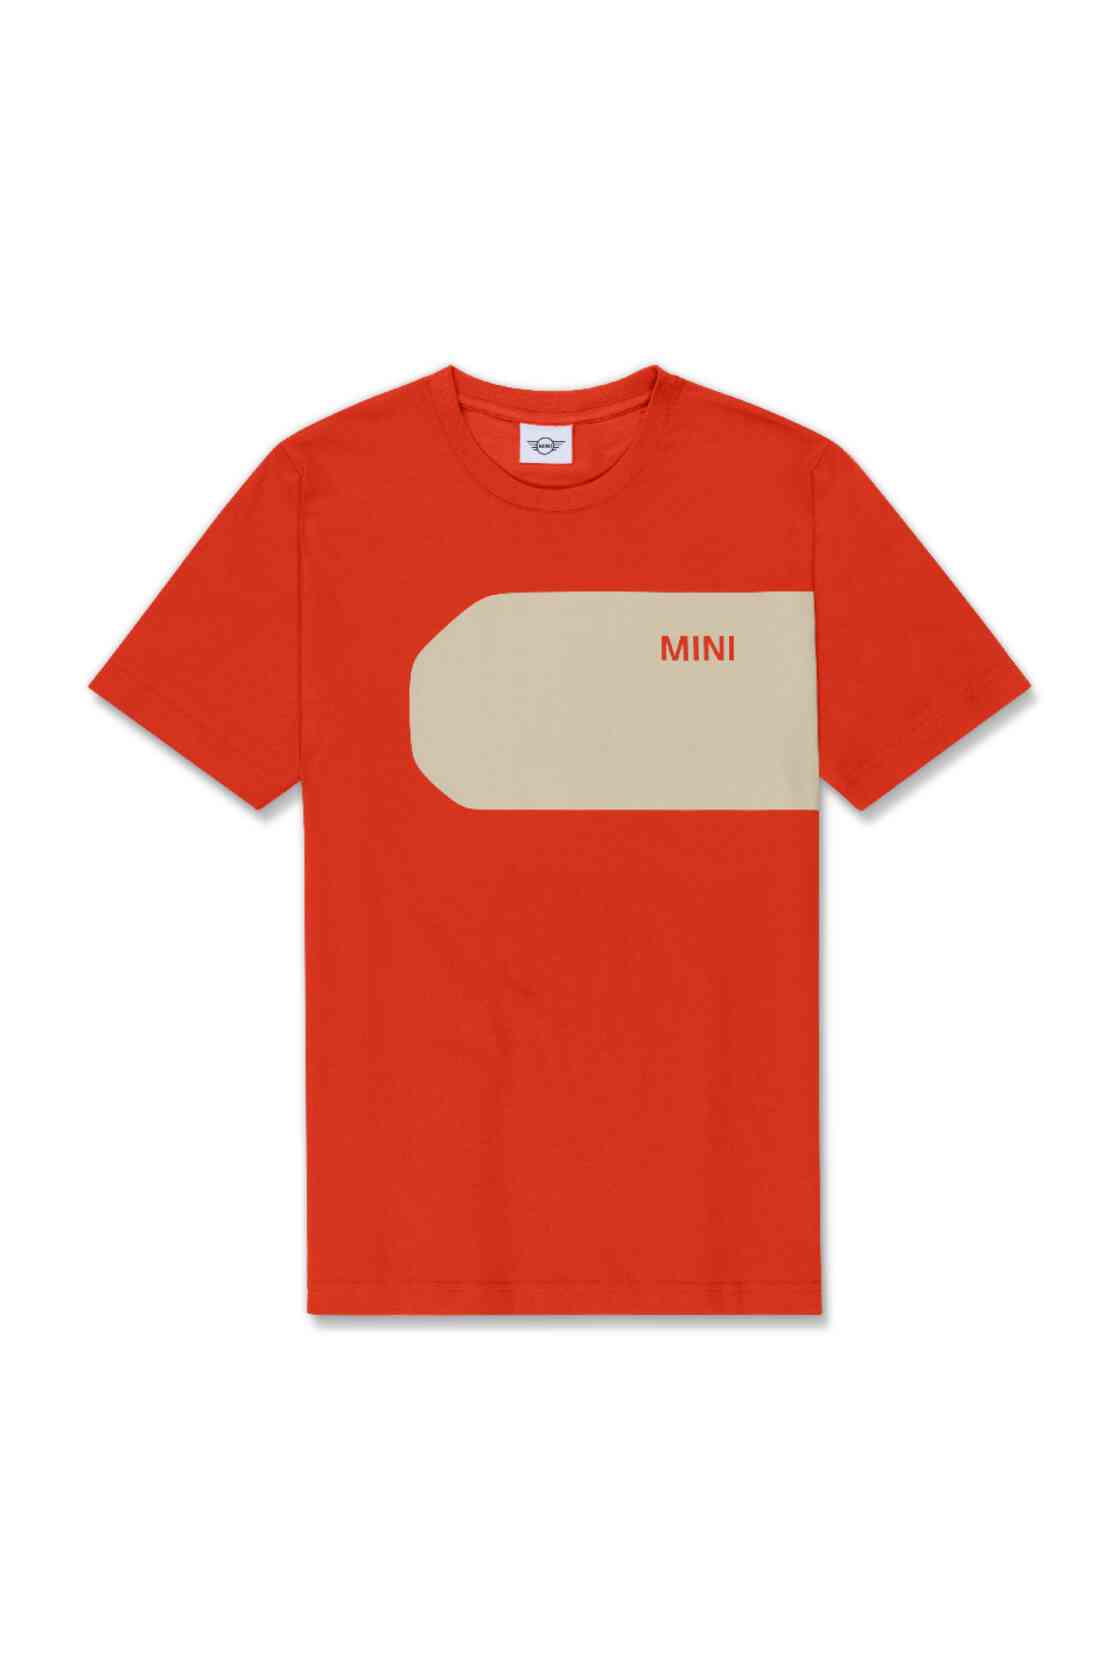 MINI T-Shirt Men's Car Face Detail Rebel Red